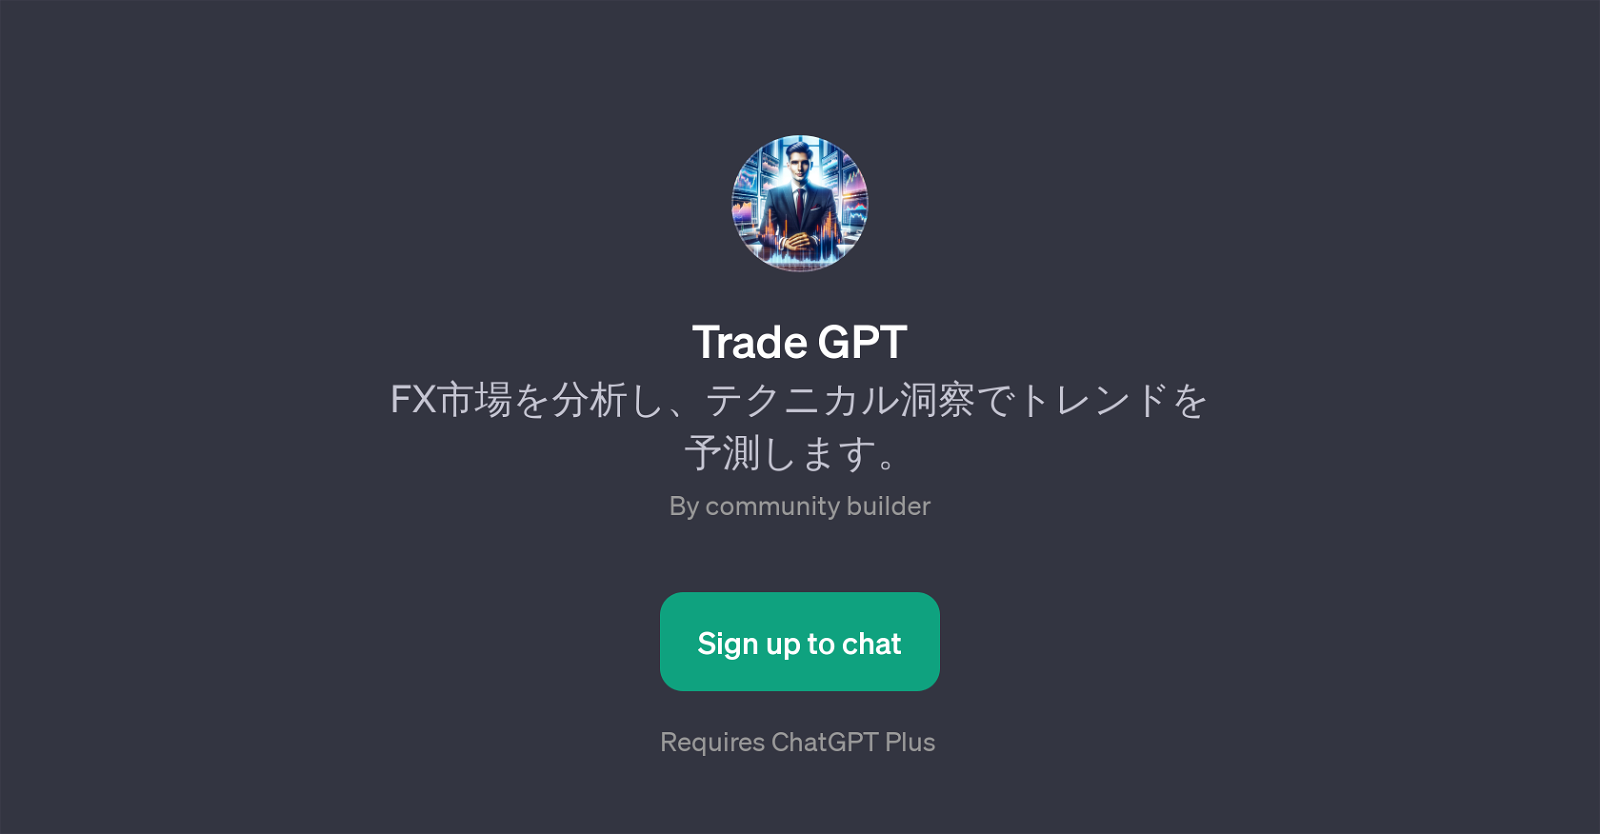 Trade GPT website